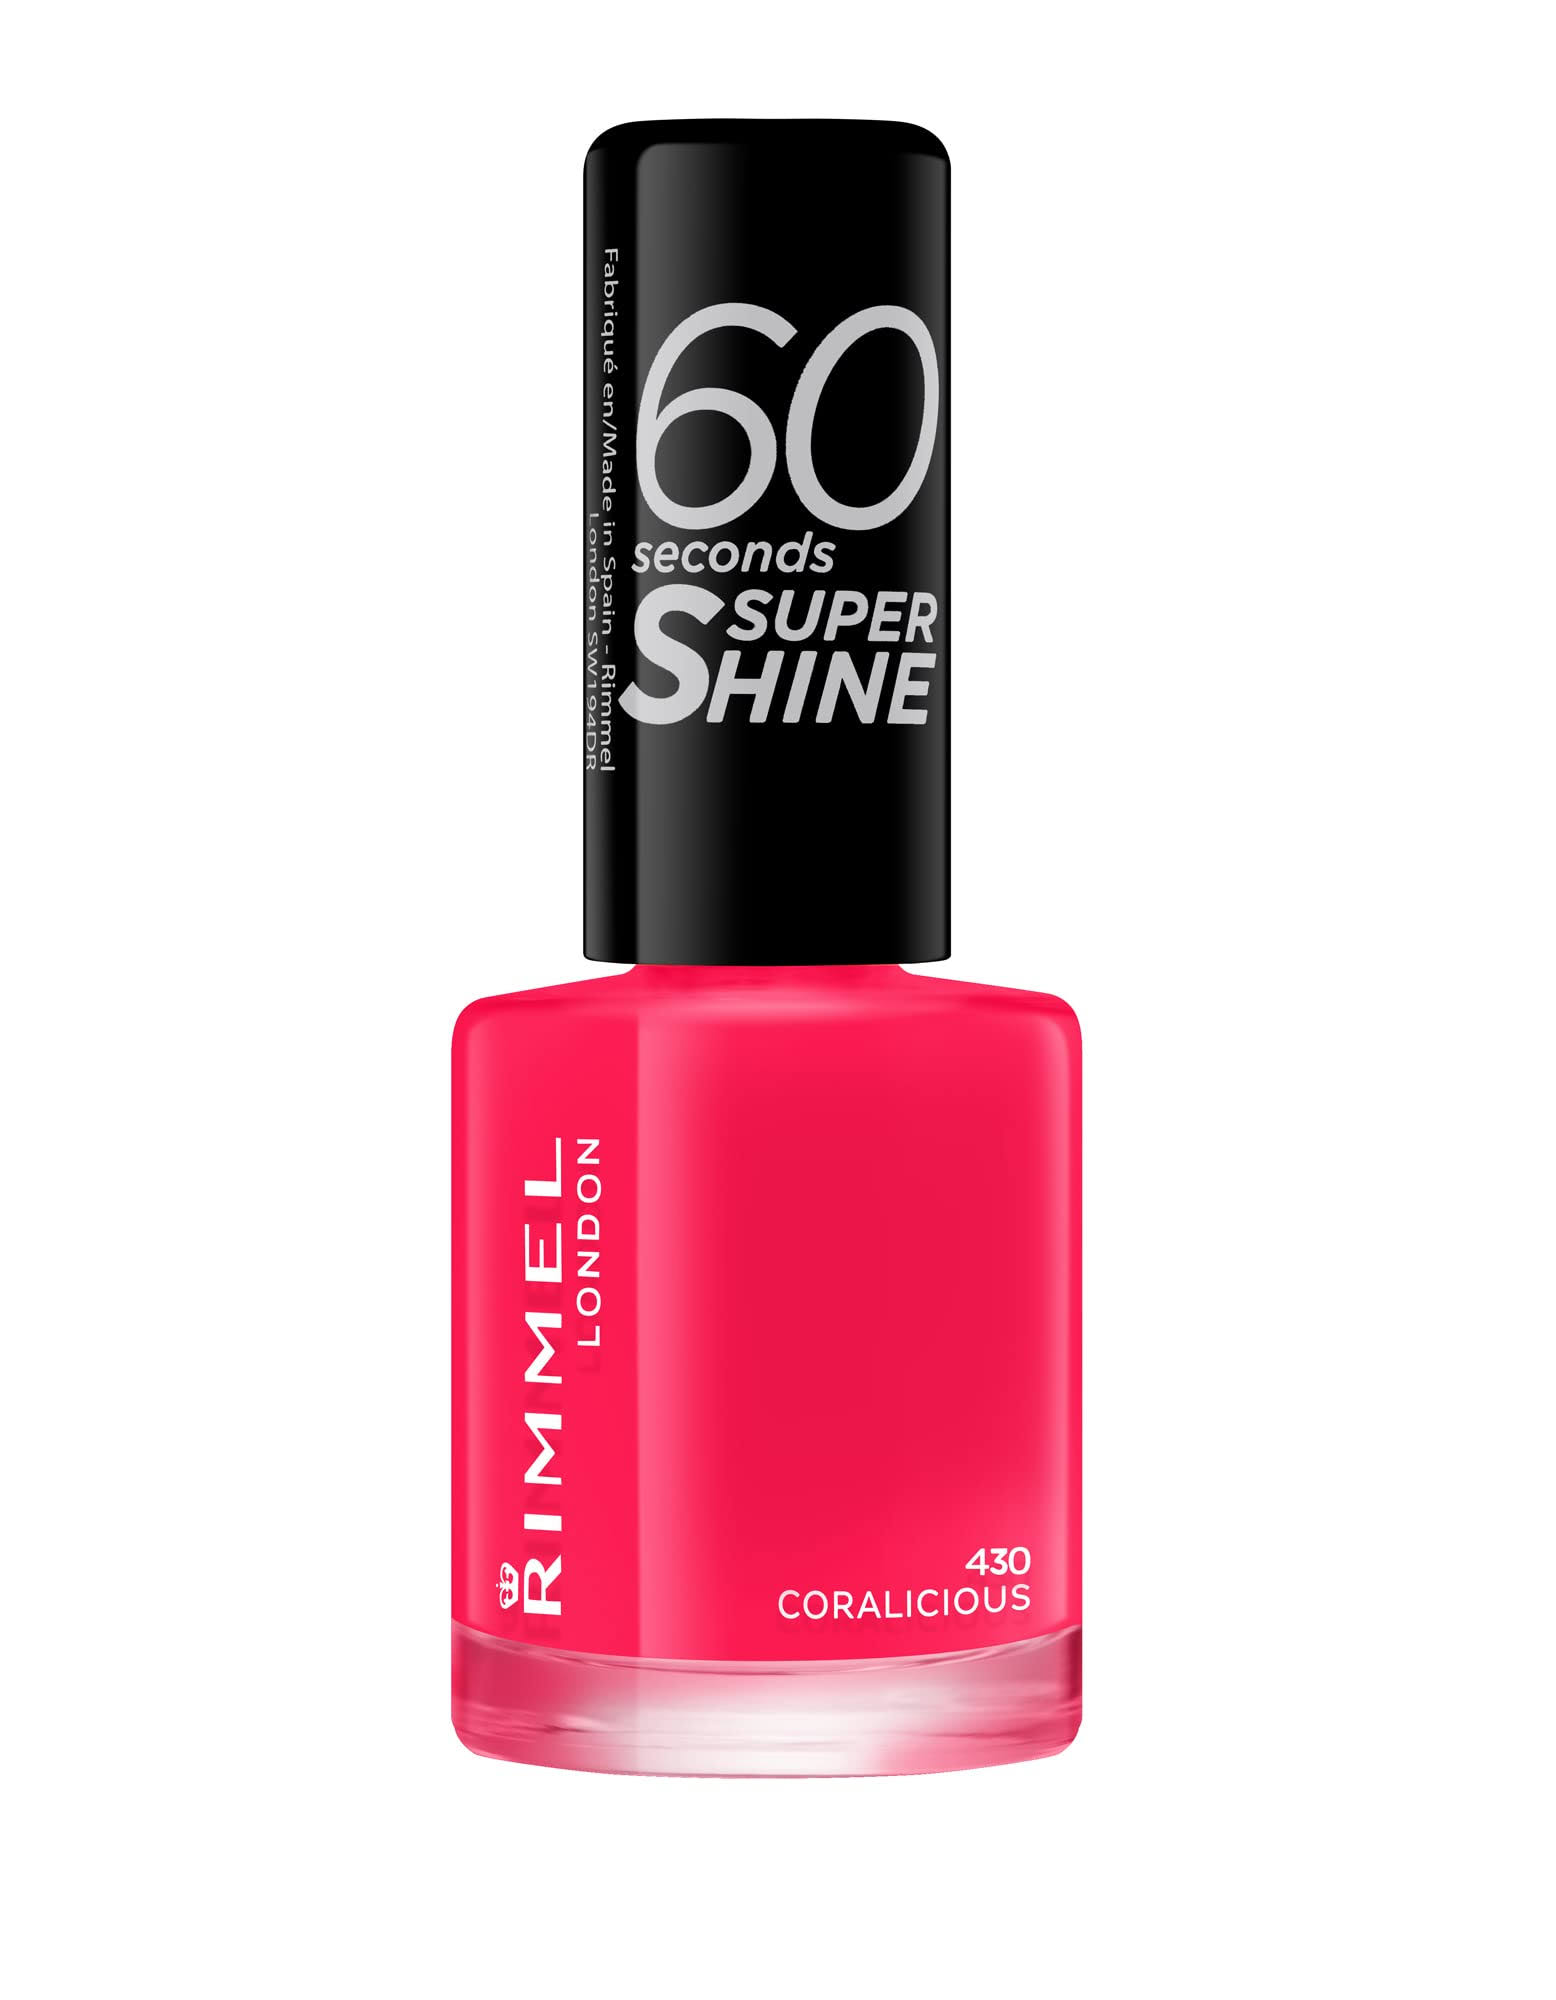 Rimmel London 60 Seconds Super Shine Nail Polish - 430 Coralicious, 8ml